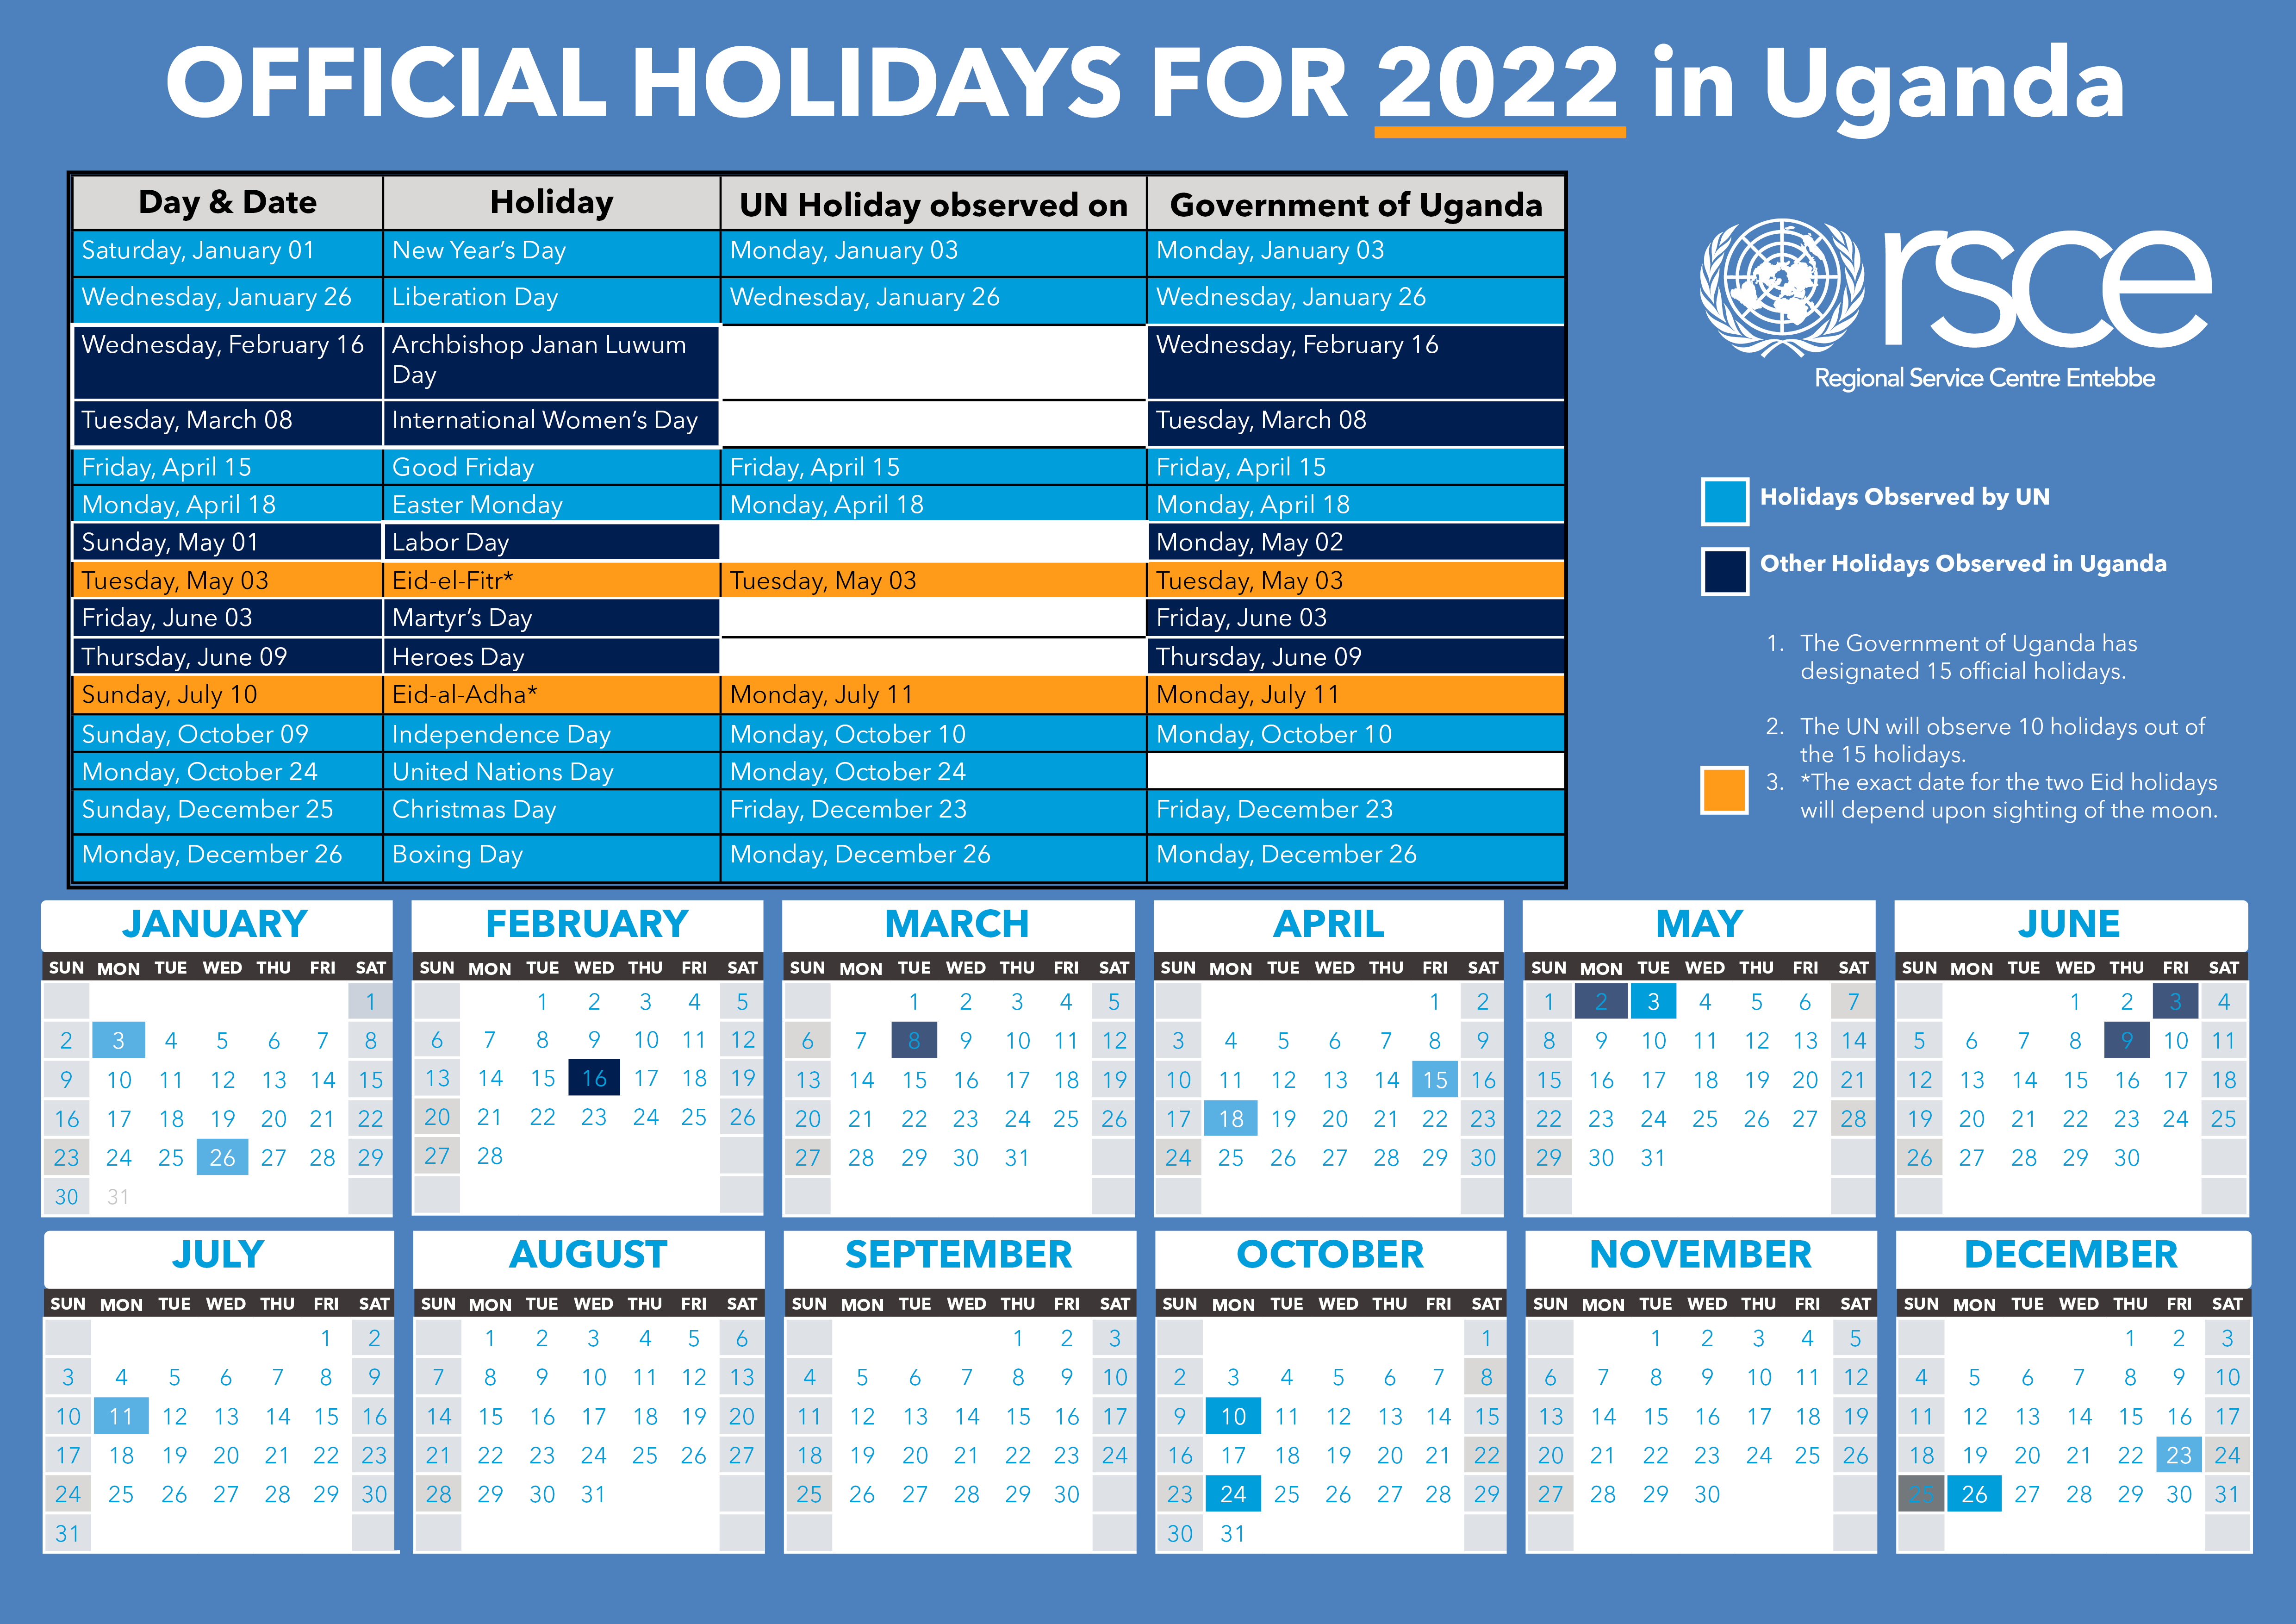 January 2022 public holidays